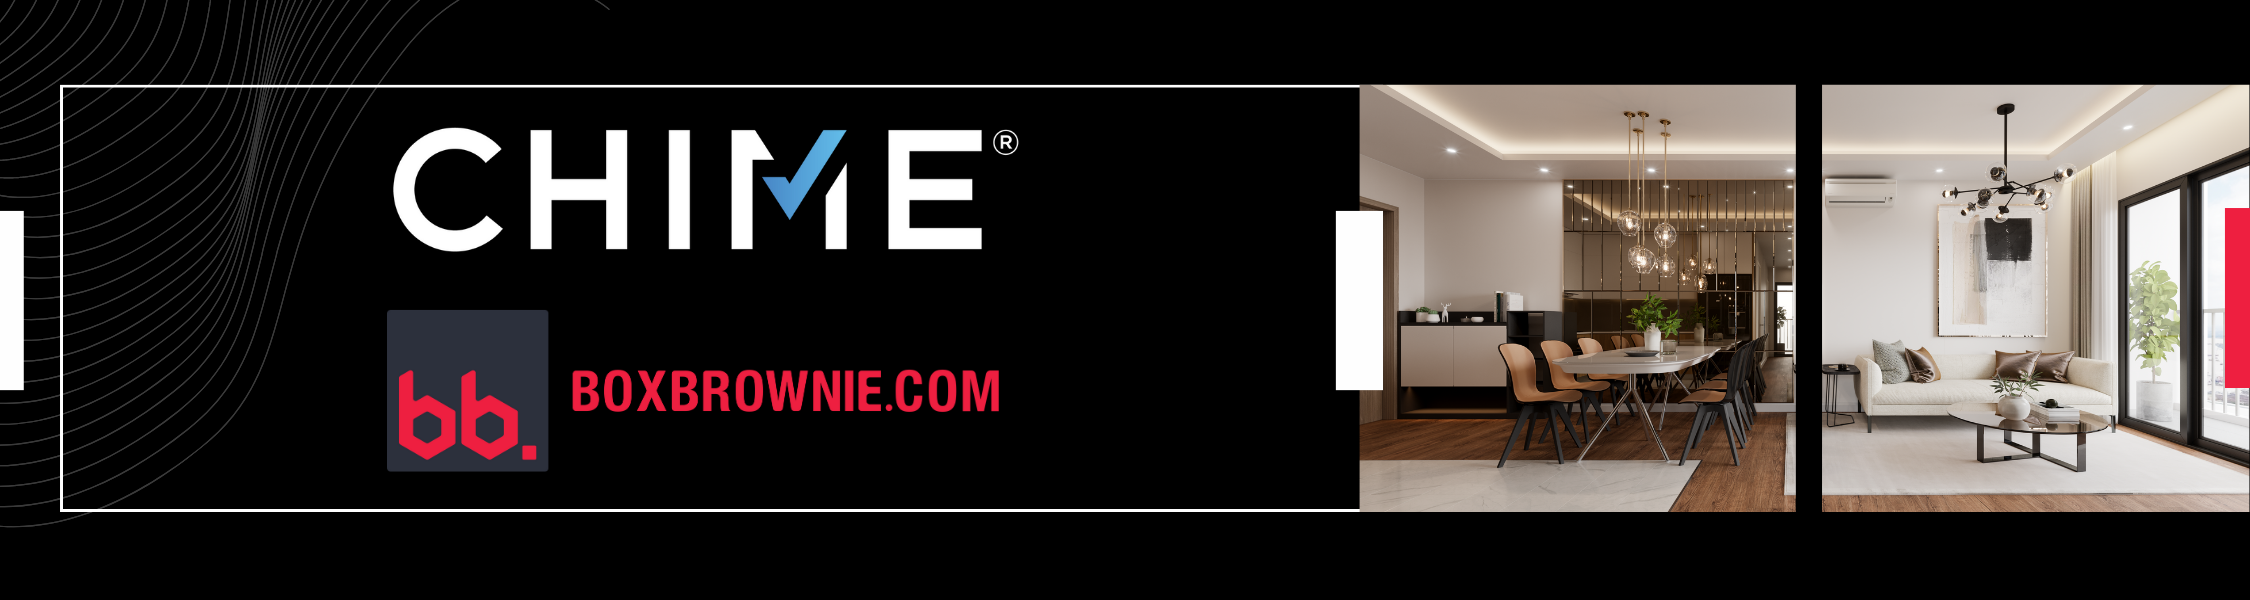 Chime + BoxBrownie.com Partner LP 